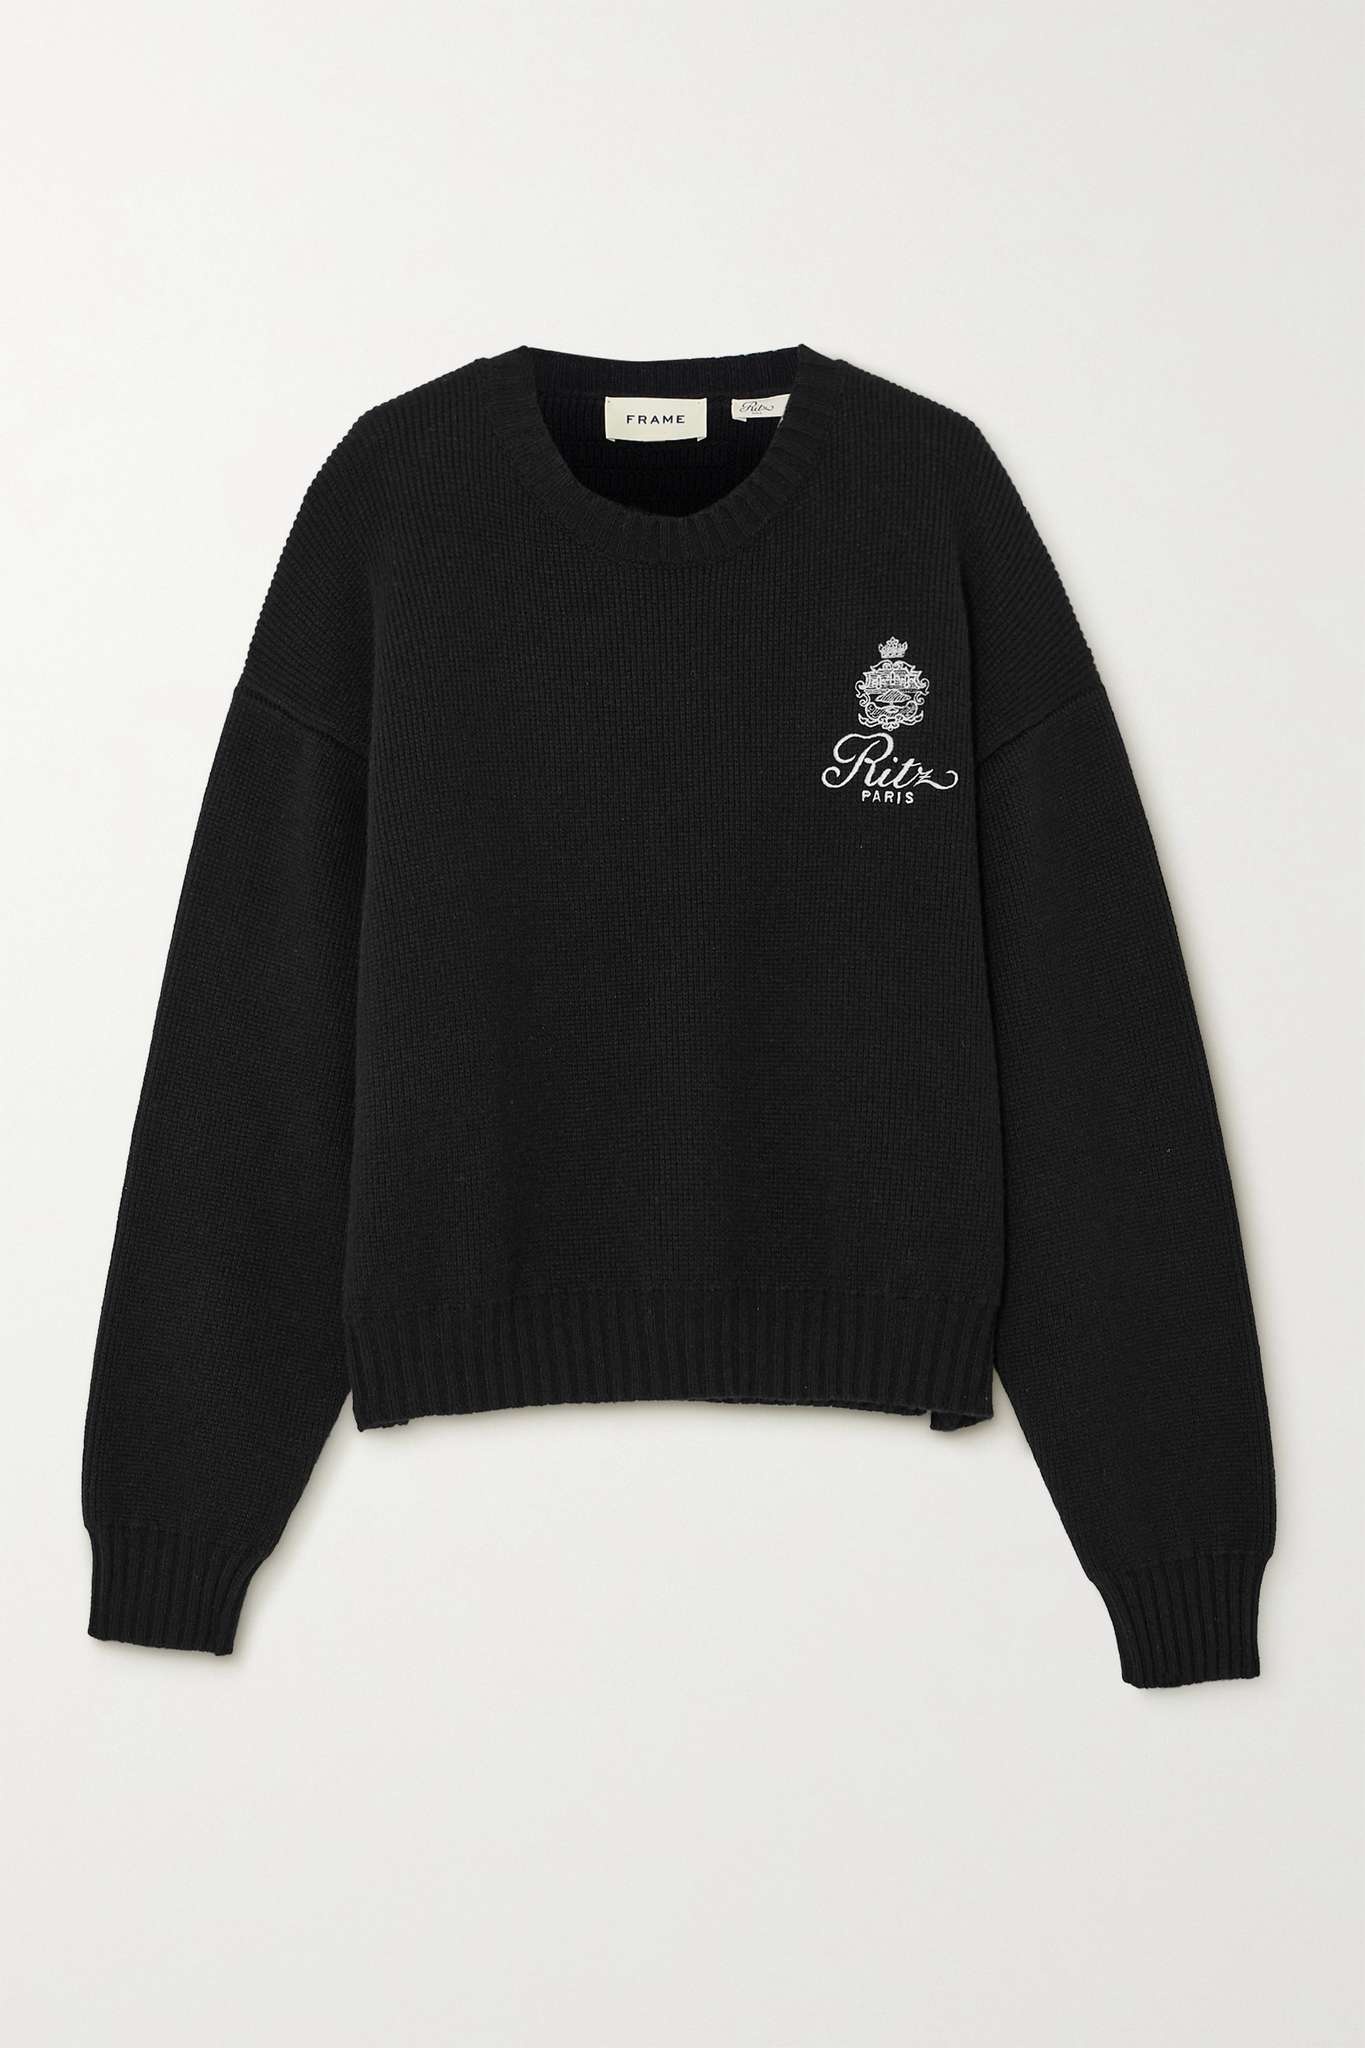 + Ritz Paris embroidered cashmere sweater - 1